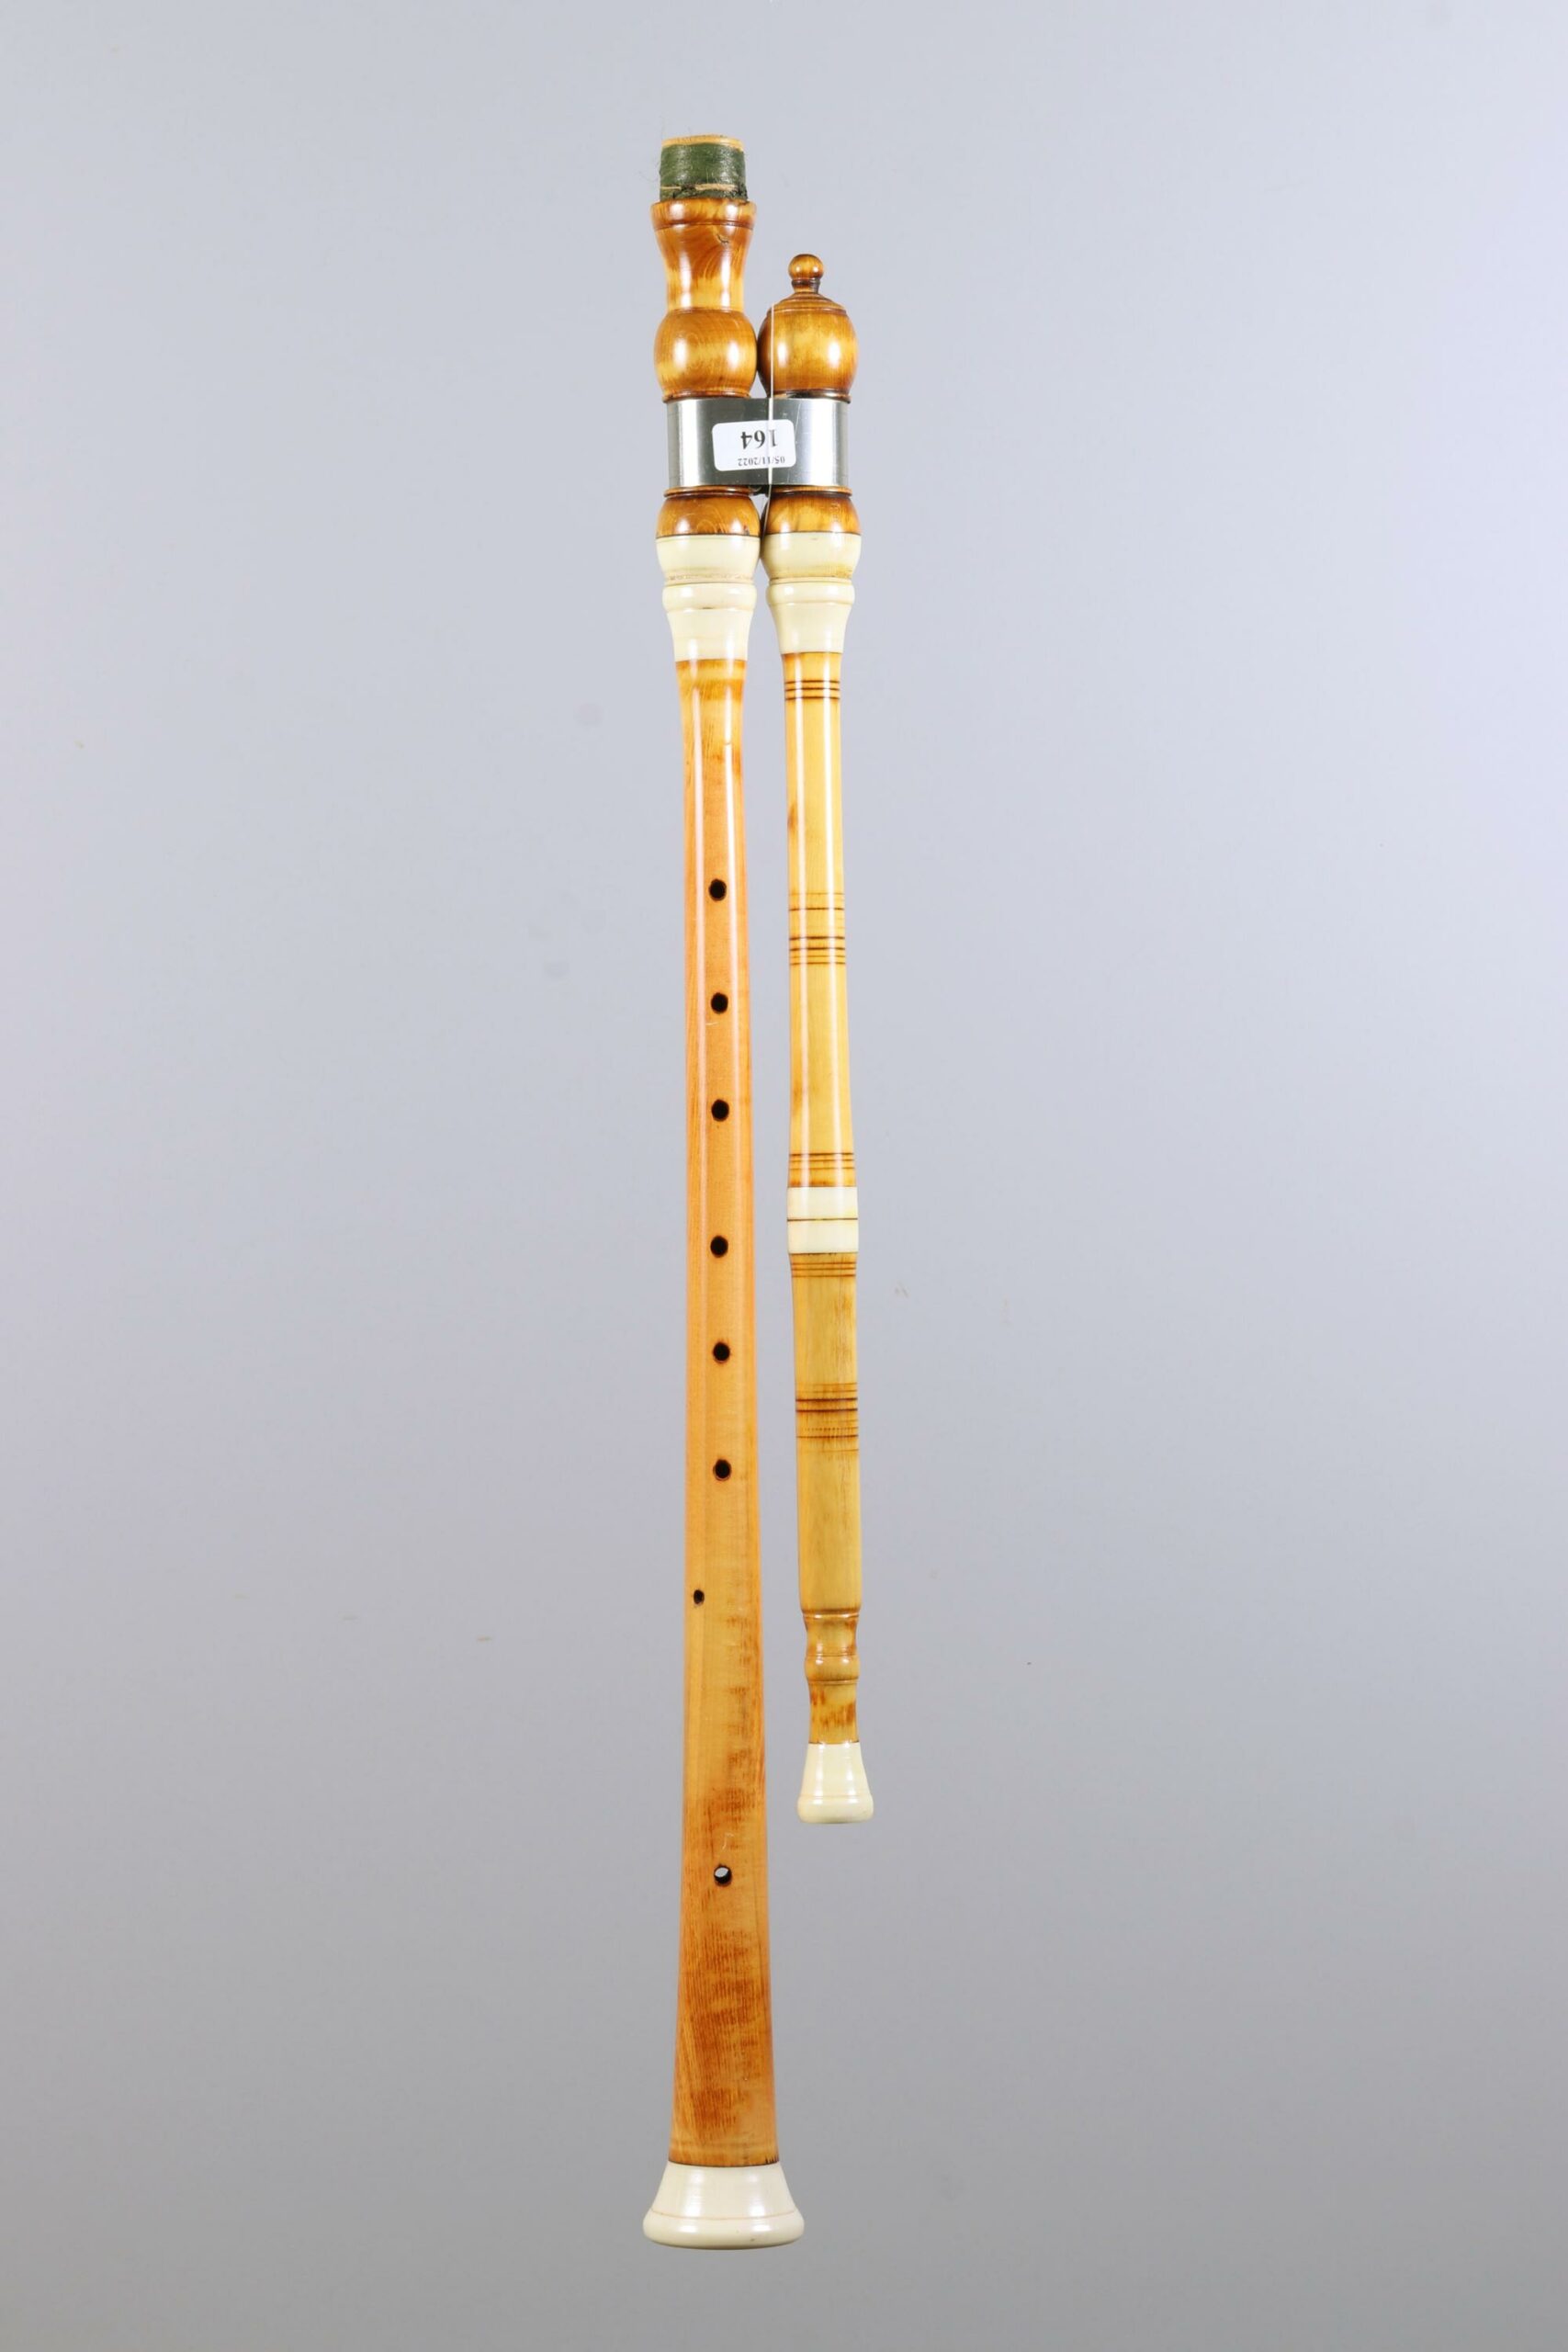 Pied de cabrette en buis, en La (48cm) de Joseph RUOLS Collection Joseph RUOLS Instrument mis en vente par Vichy Enchères le 5 novembre 2022 © C. Darbelet